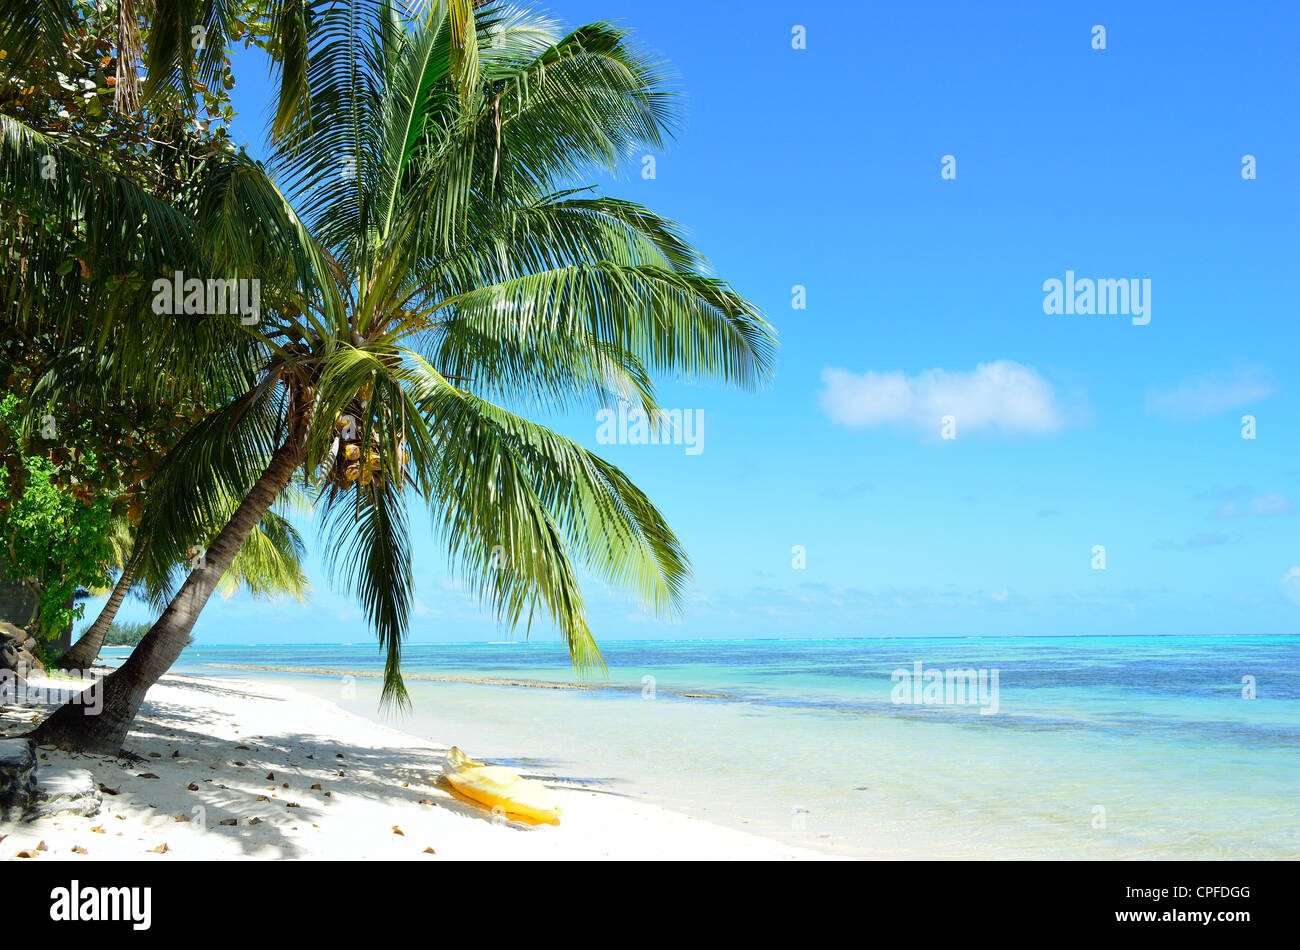 Watersport kayak under a palm tree on a tropical white sand beach with a blue sea on Moorea, an island near Tahiti. Stock Photo